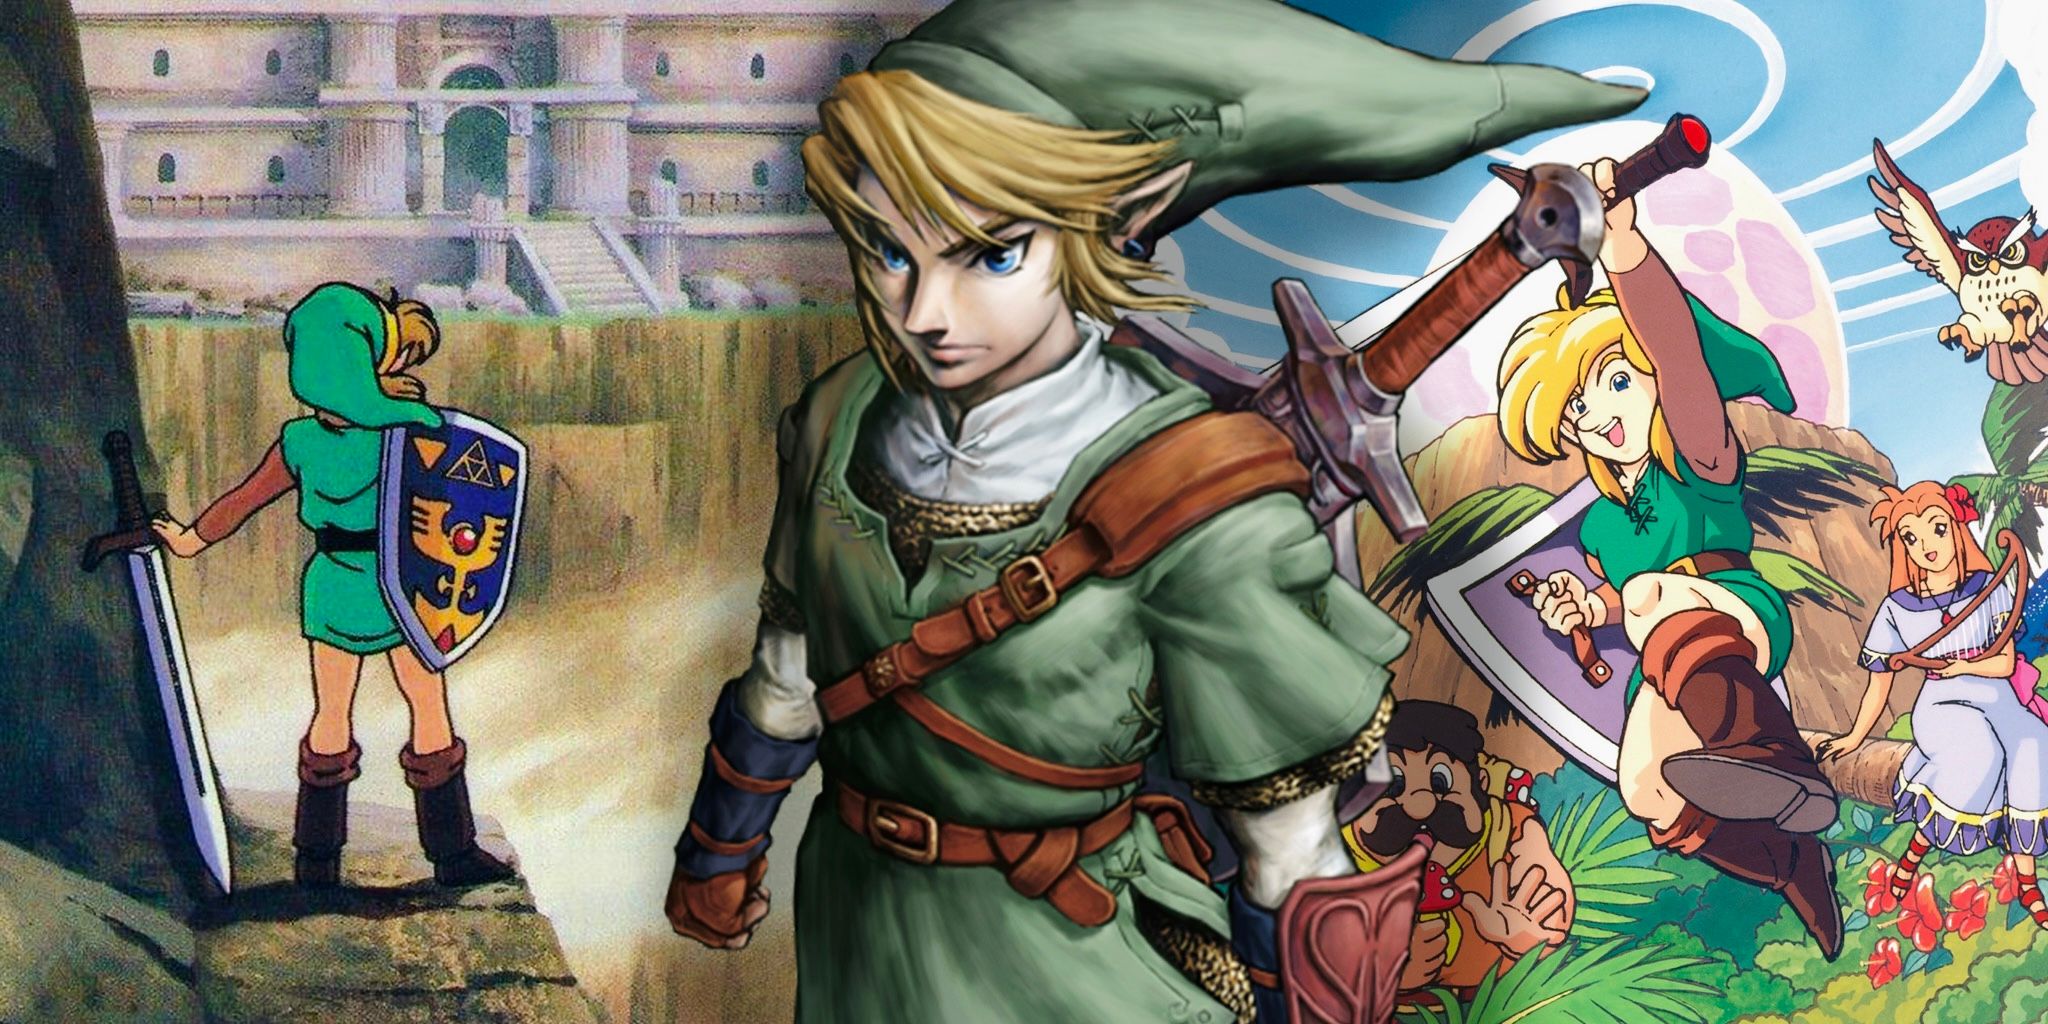 Link from Twilight Princess looks over The Legend of Zelda: Link's Awakening concept art